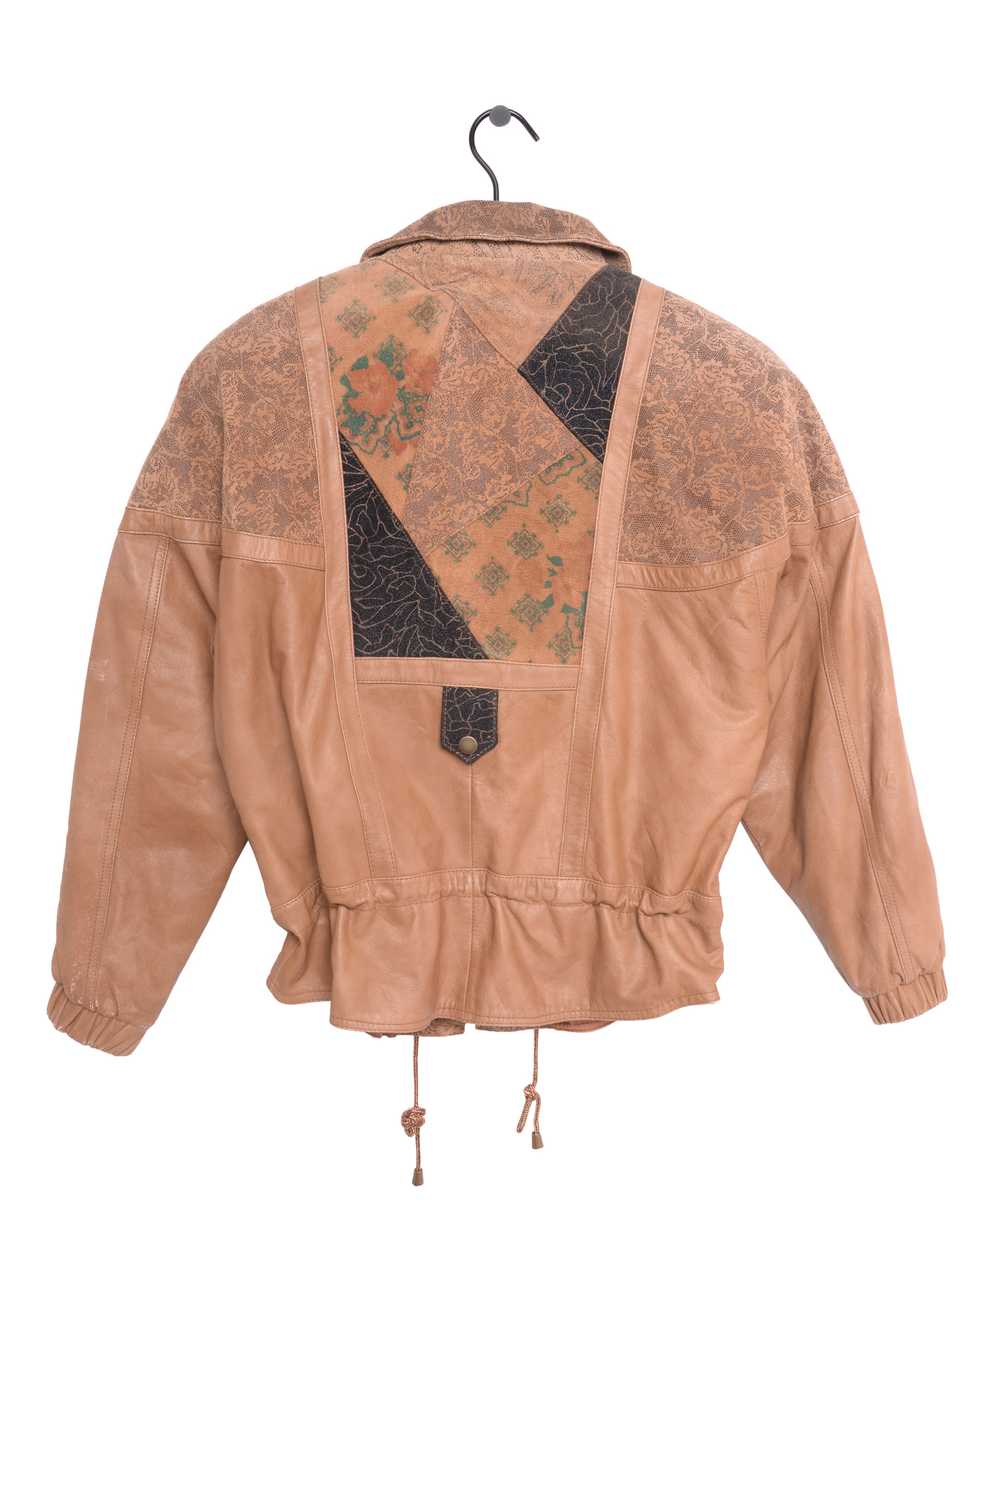 1980s Patchwork Leather Jacket - image 2